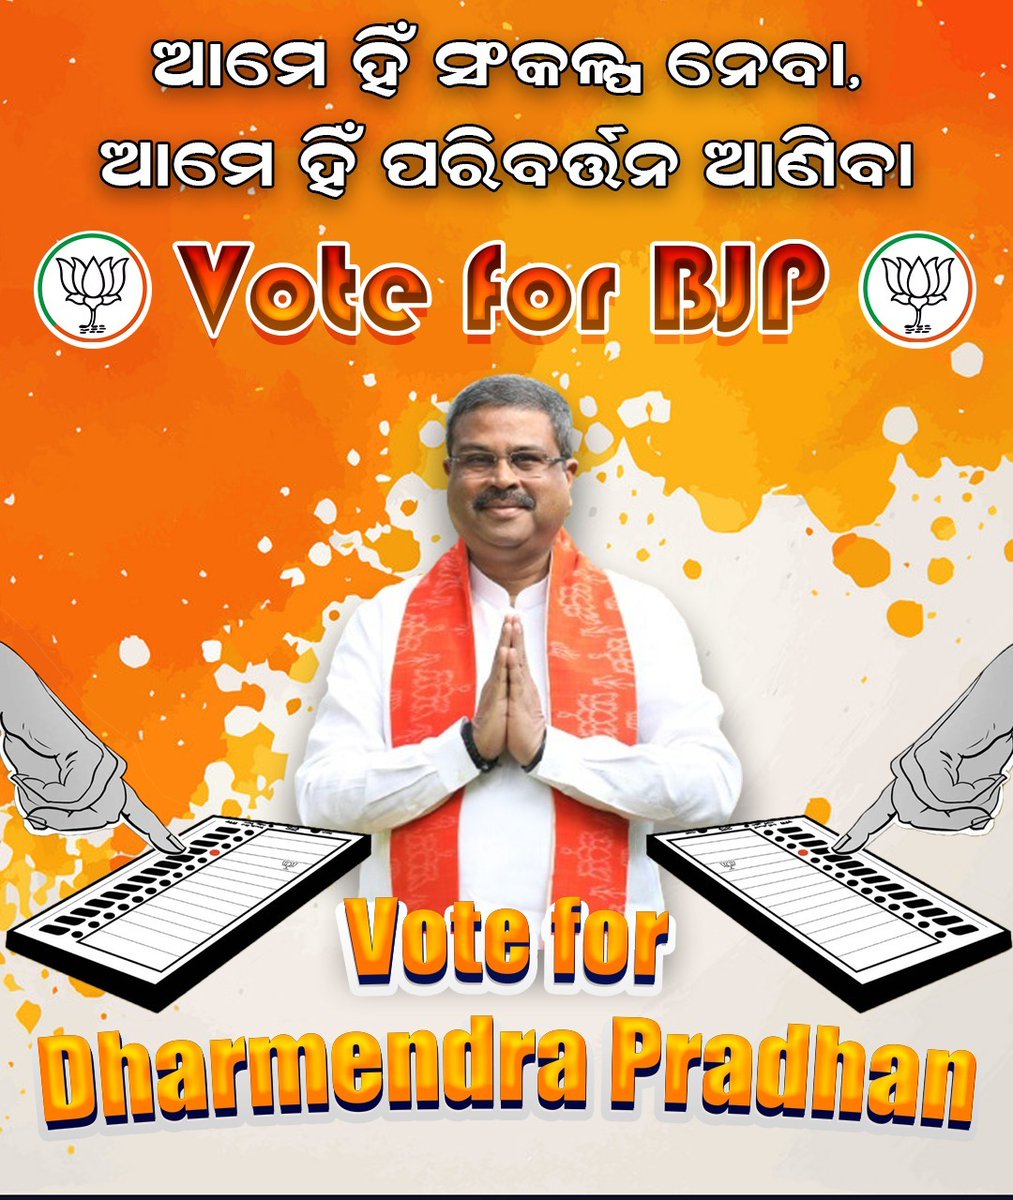 Vote for BJP
Vote for DharmendraPradhan 🌷